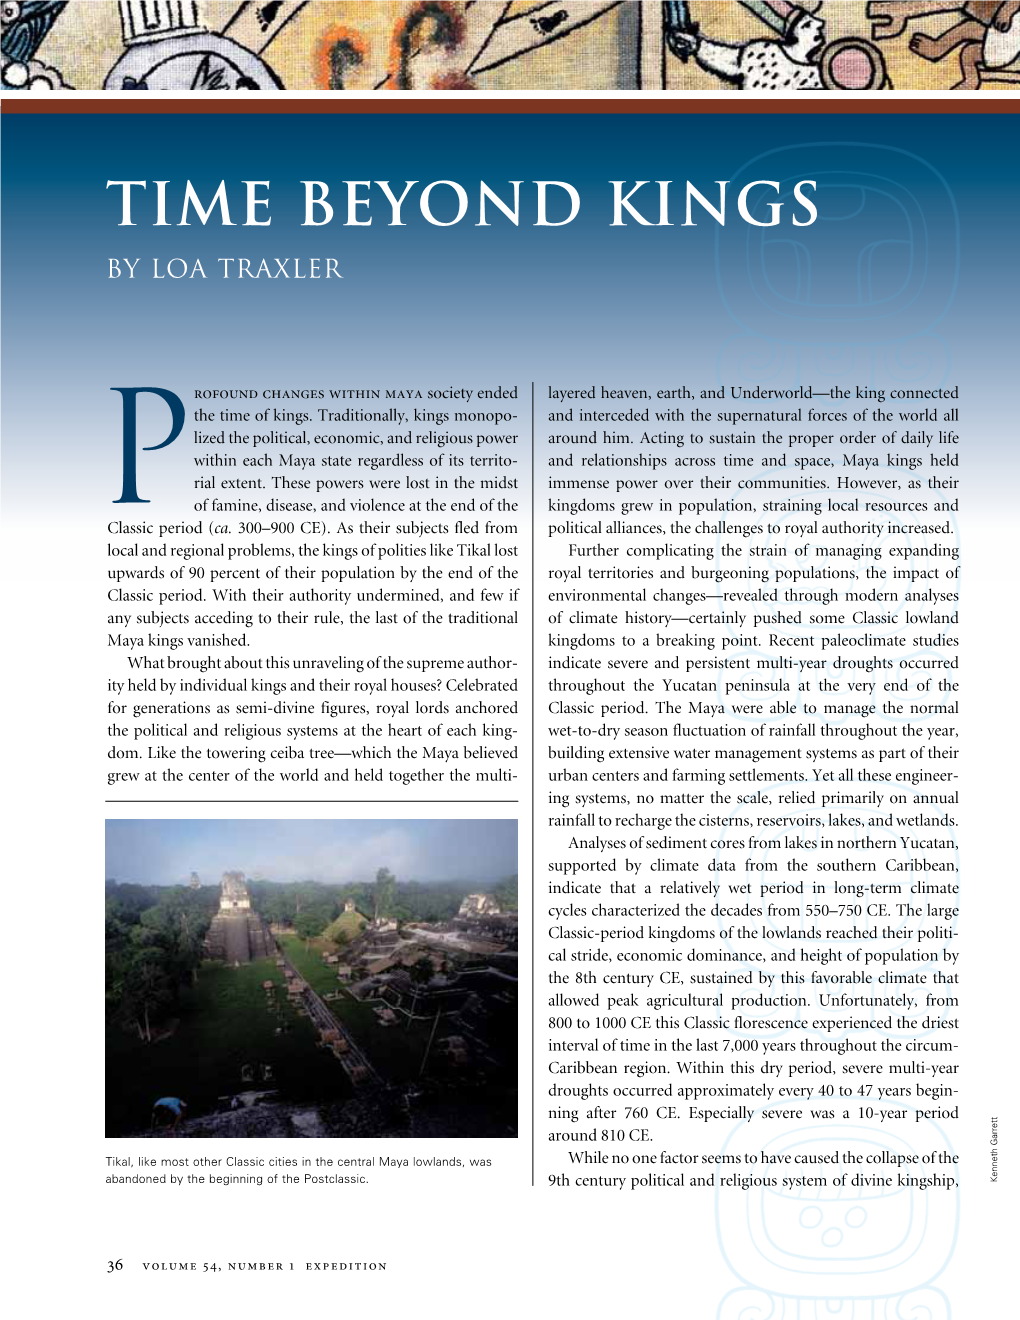 Time Beyond Kings by Loa Traxler